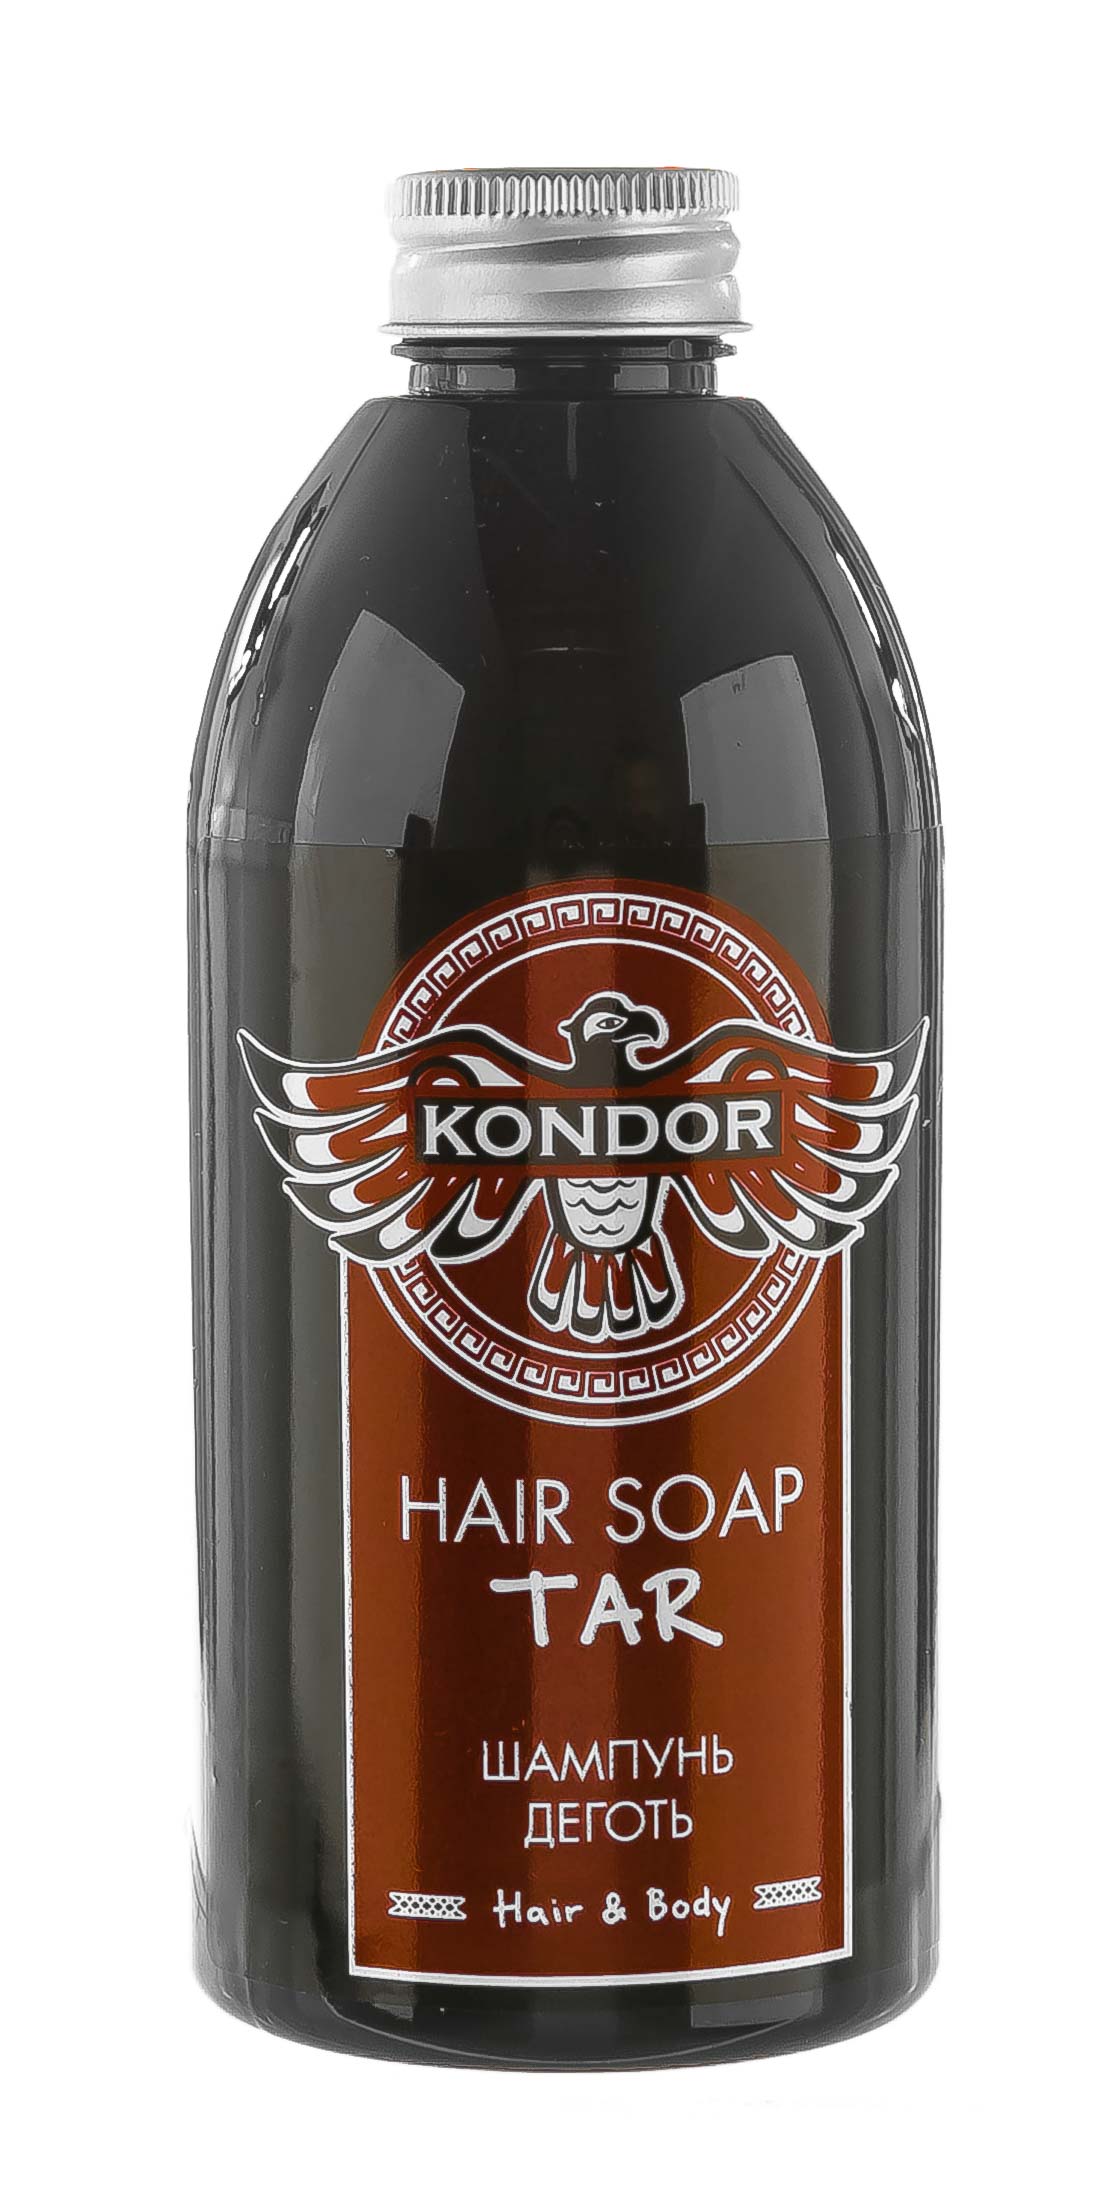 Kondor Шампунь Дёготь Hair Soap Tar, 300мл. фото